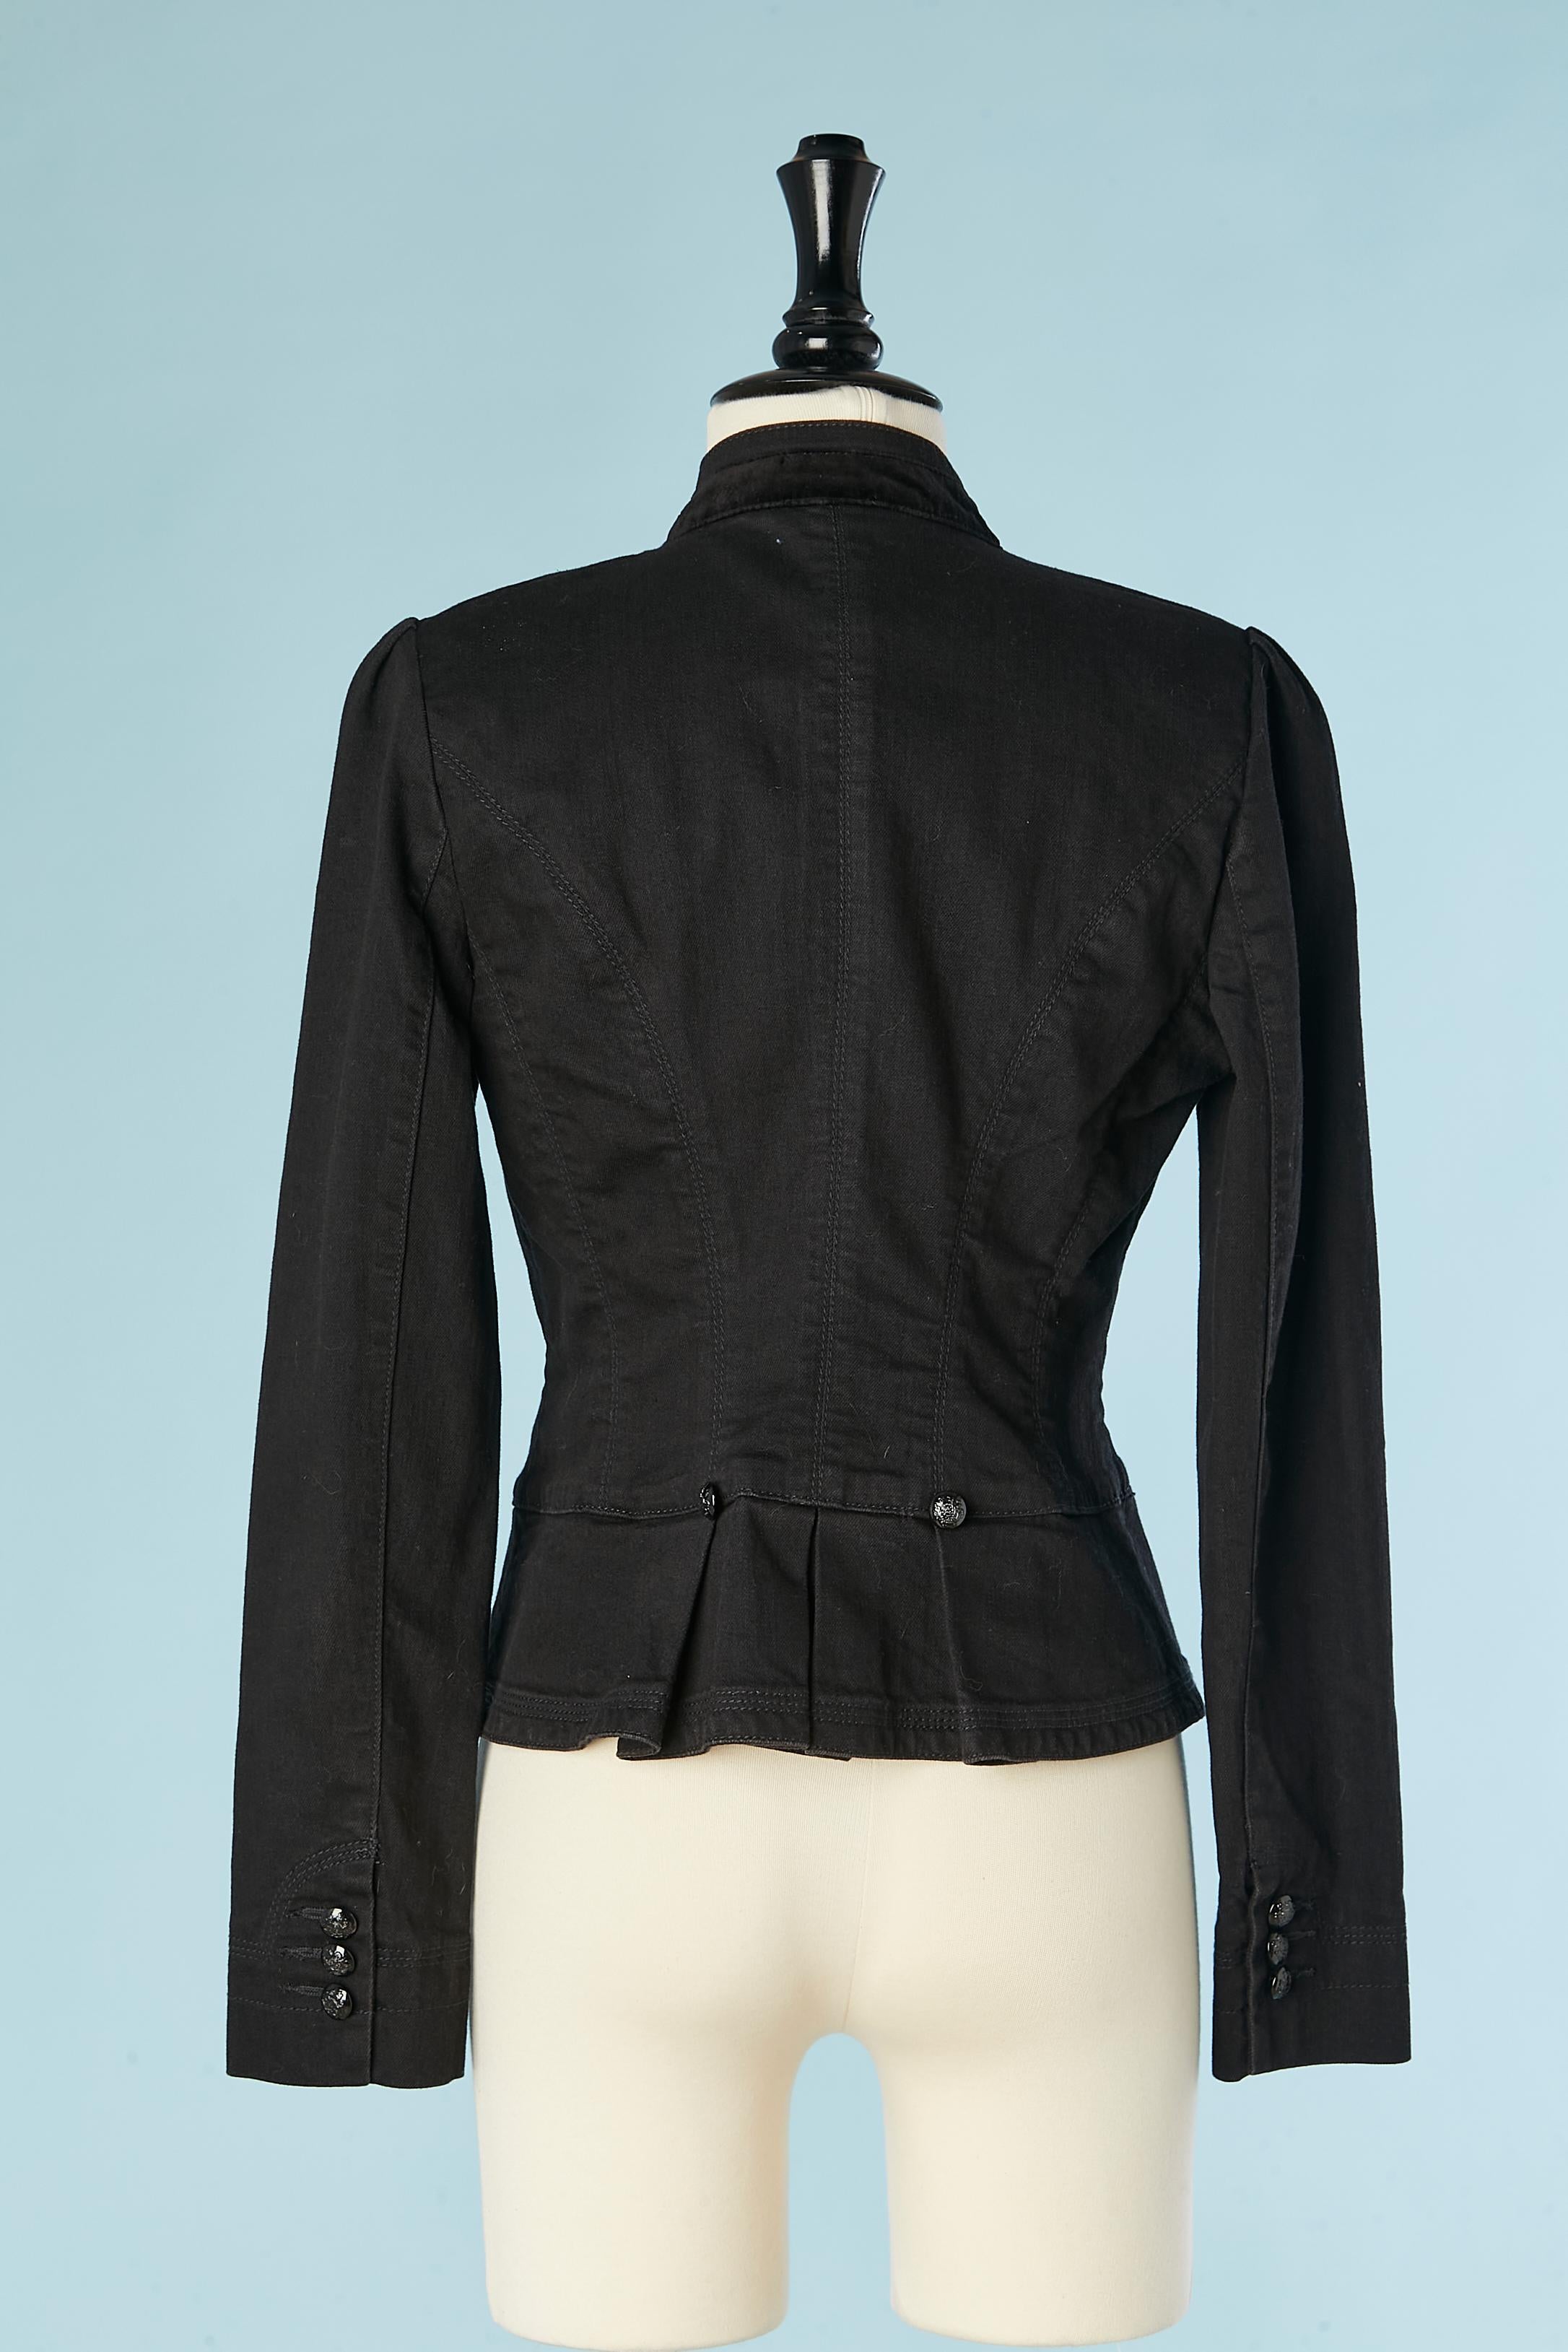 Cotton and velvet edge to edge officer jacket Lauren by Ralph Lauren  For Sale 1